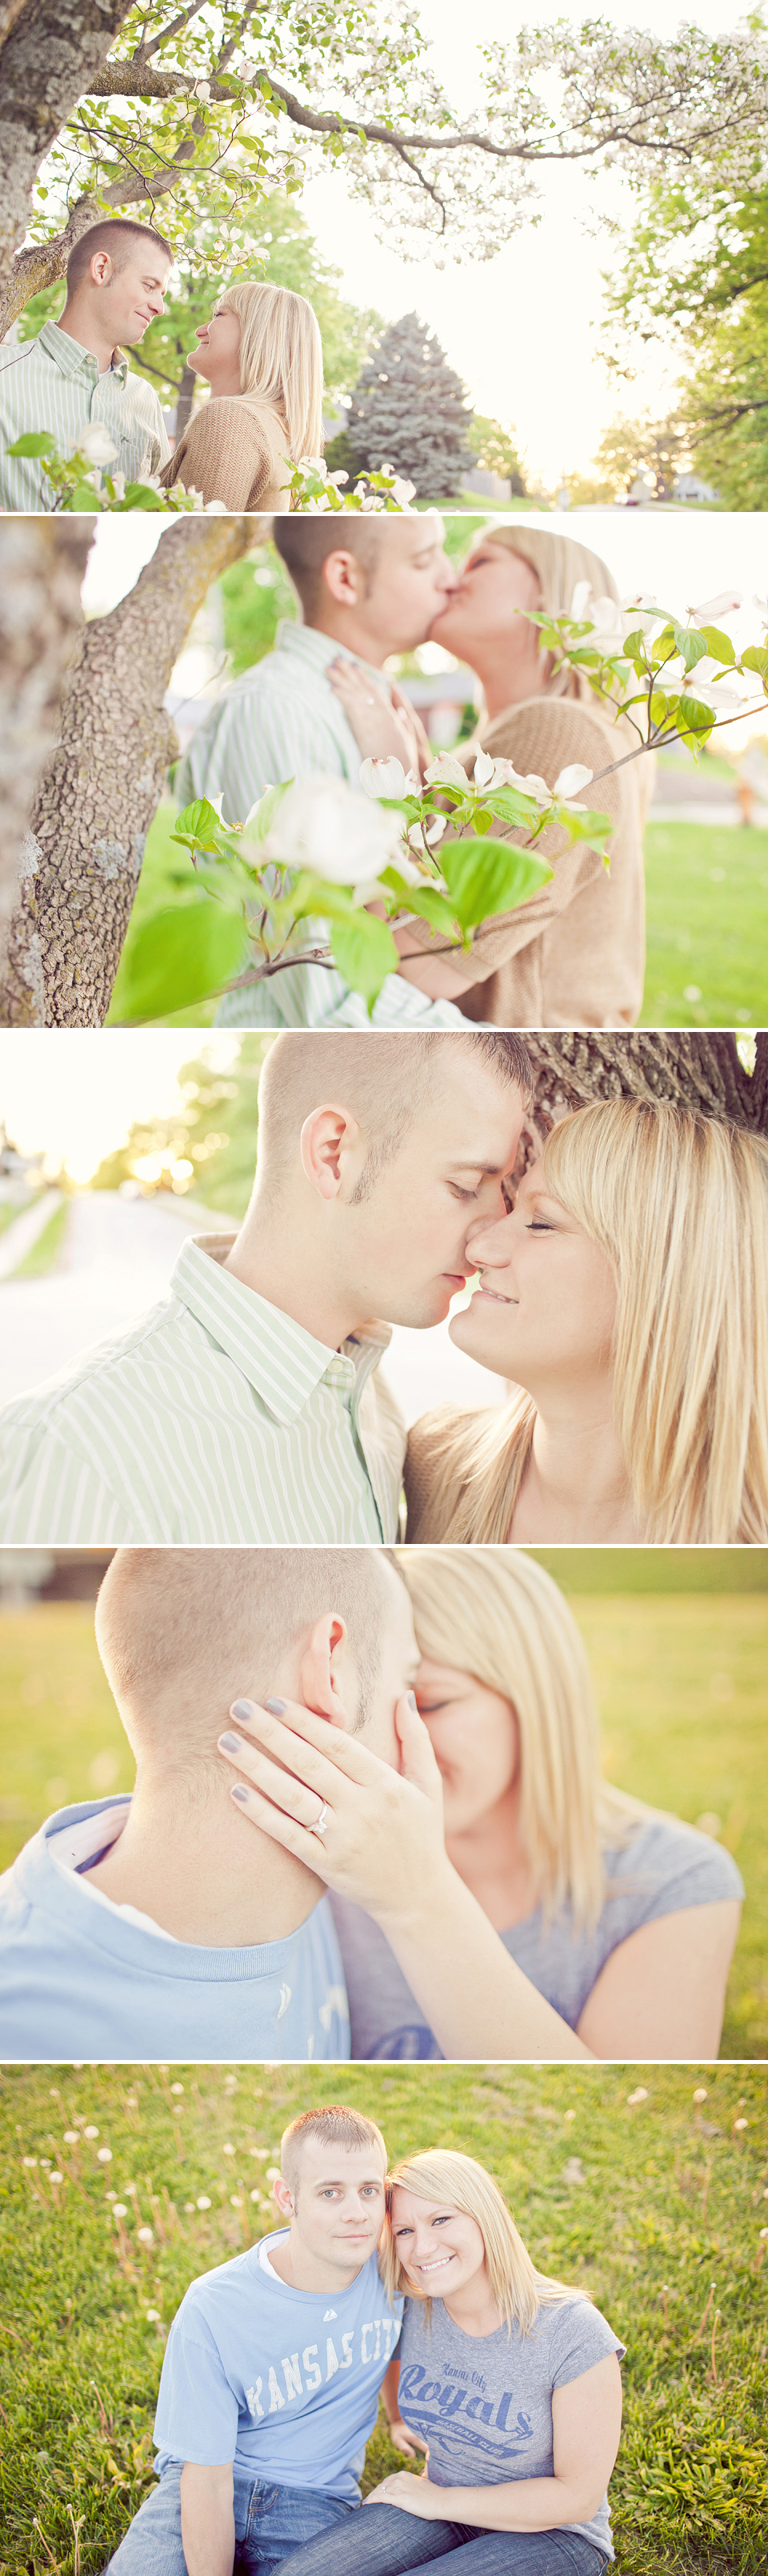 Romantic, sunsets, couples, flowers, spring trees, Kansas City Wedding Photography, Jana Marie Photos